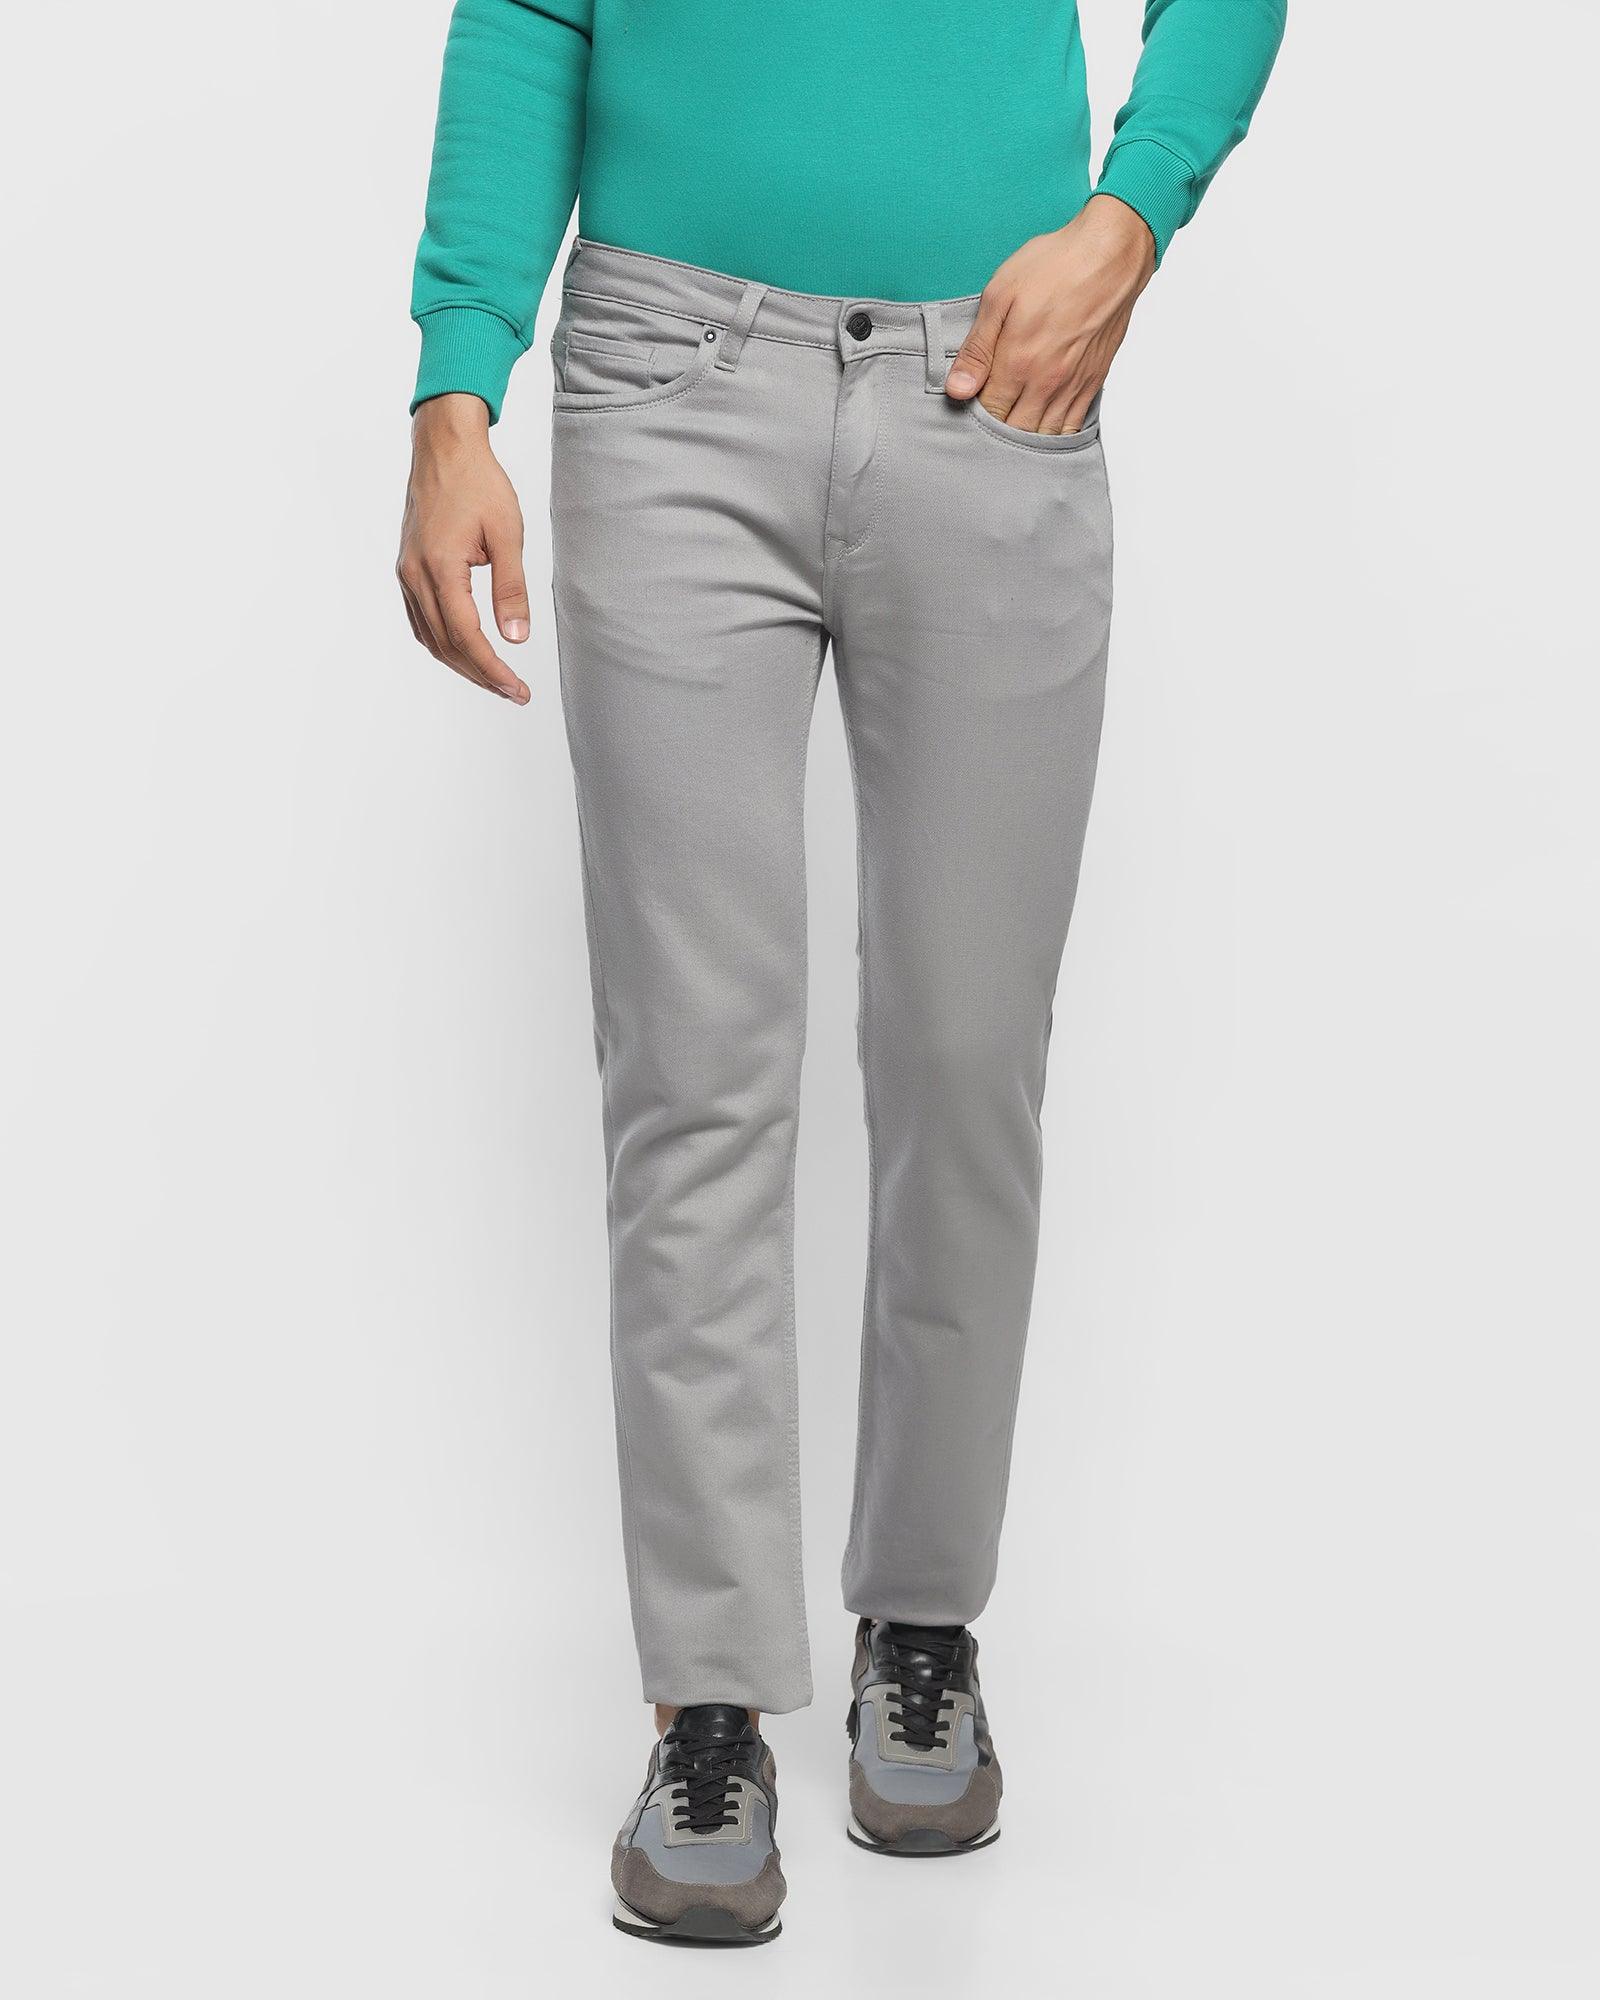 Buy YU by Pantaloons Grey Slim Fit Jeans for Mens Online @ Tata CLiQ